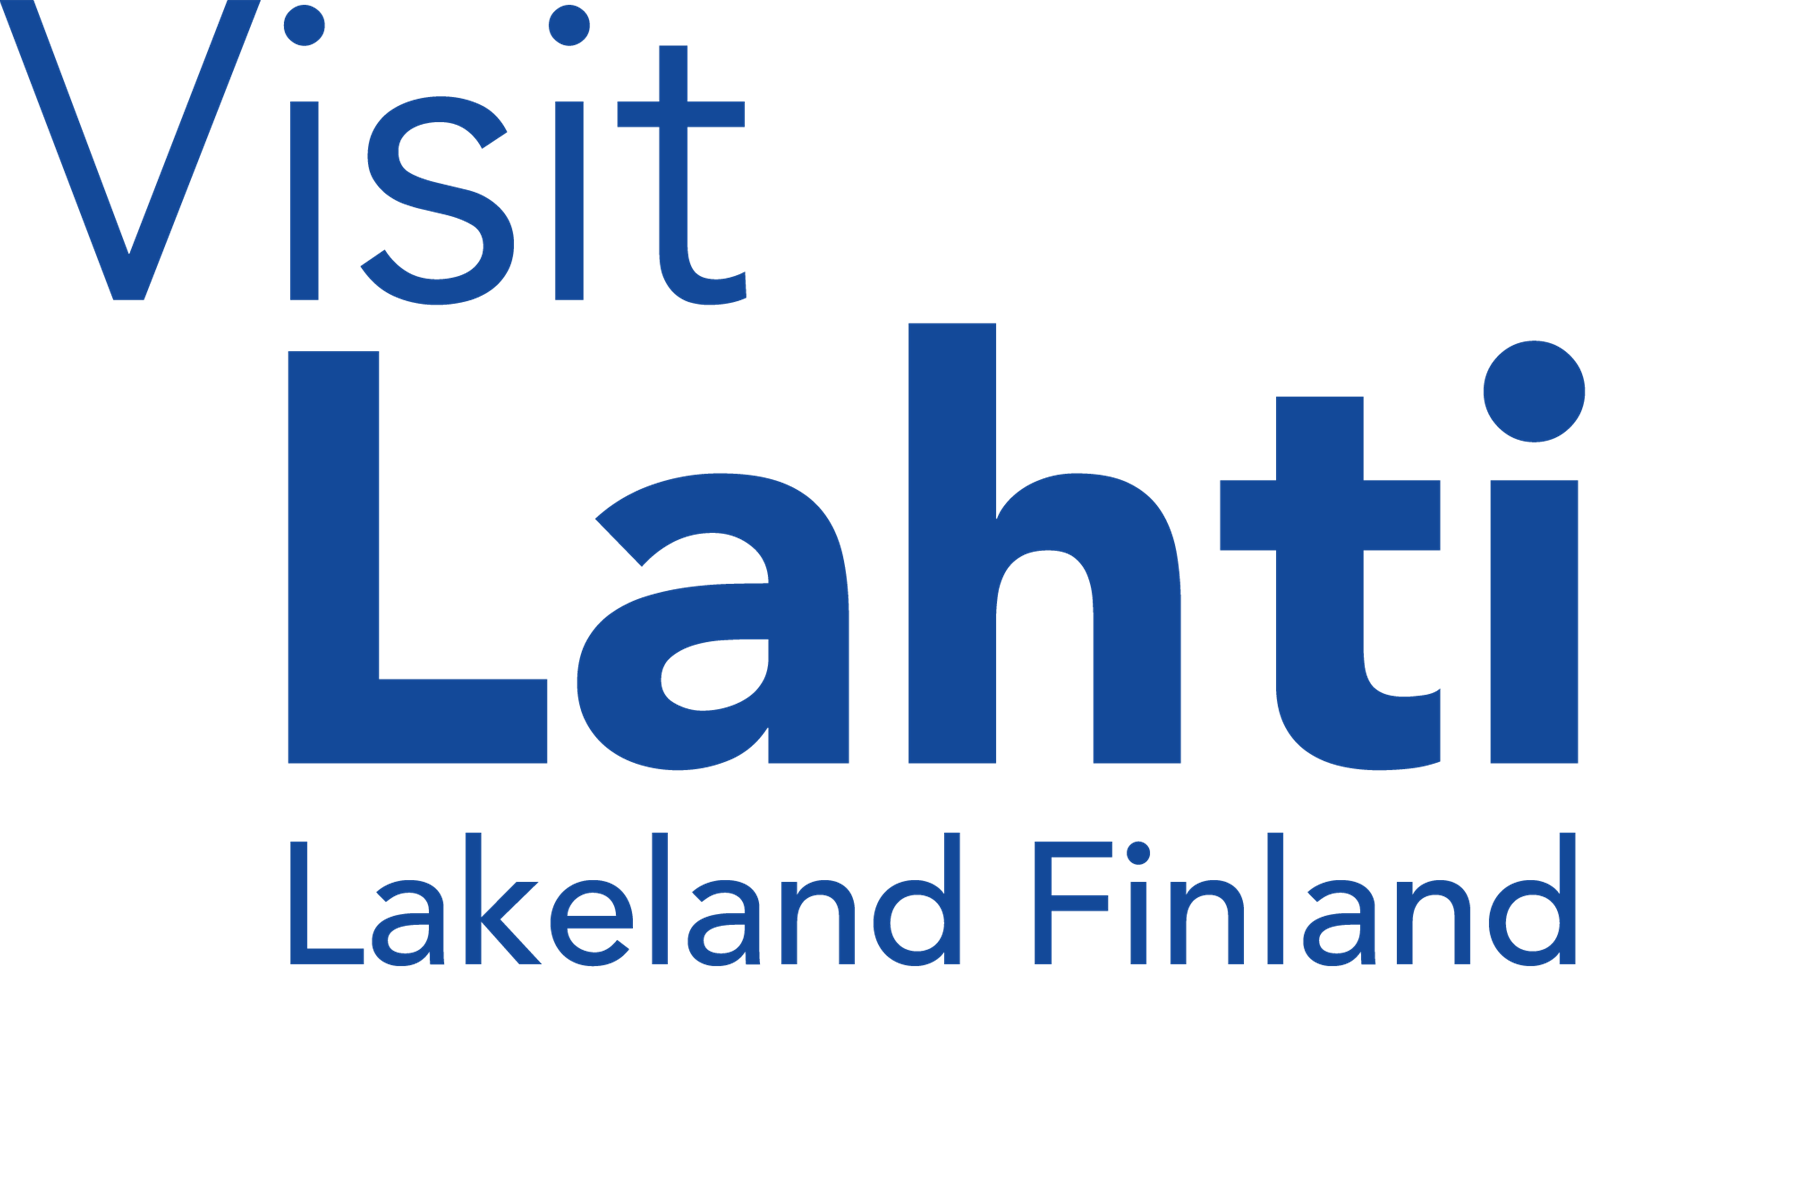 VisitLahti_Logo_Lakeland_Finland_Colour[1].png